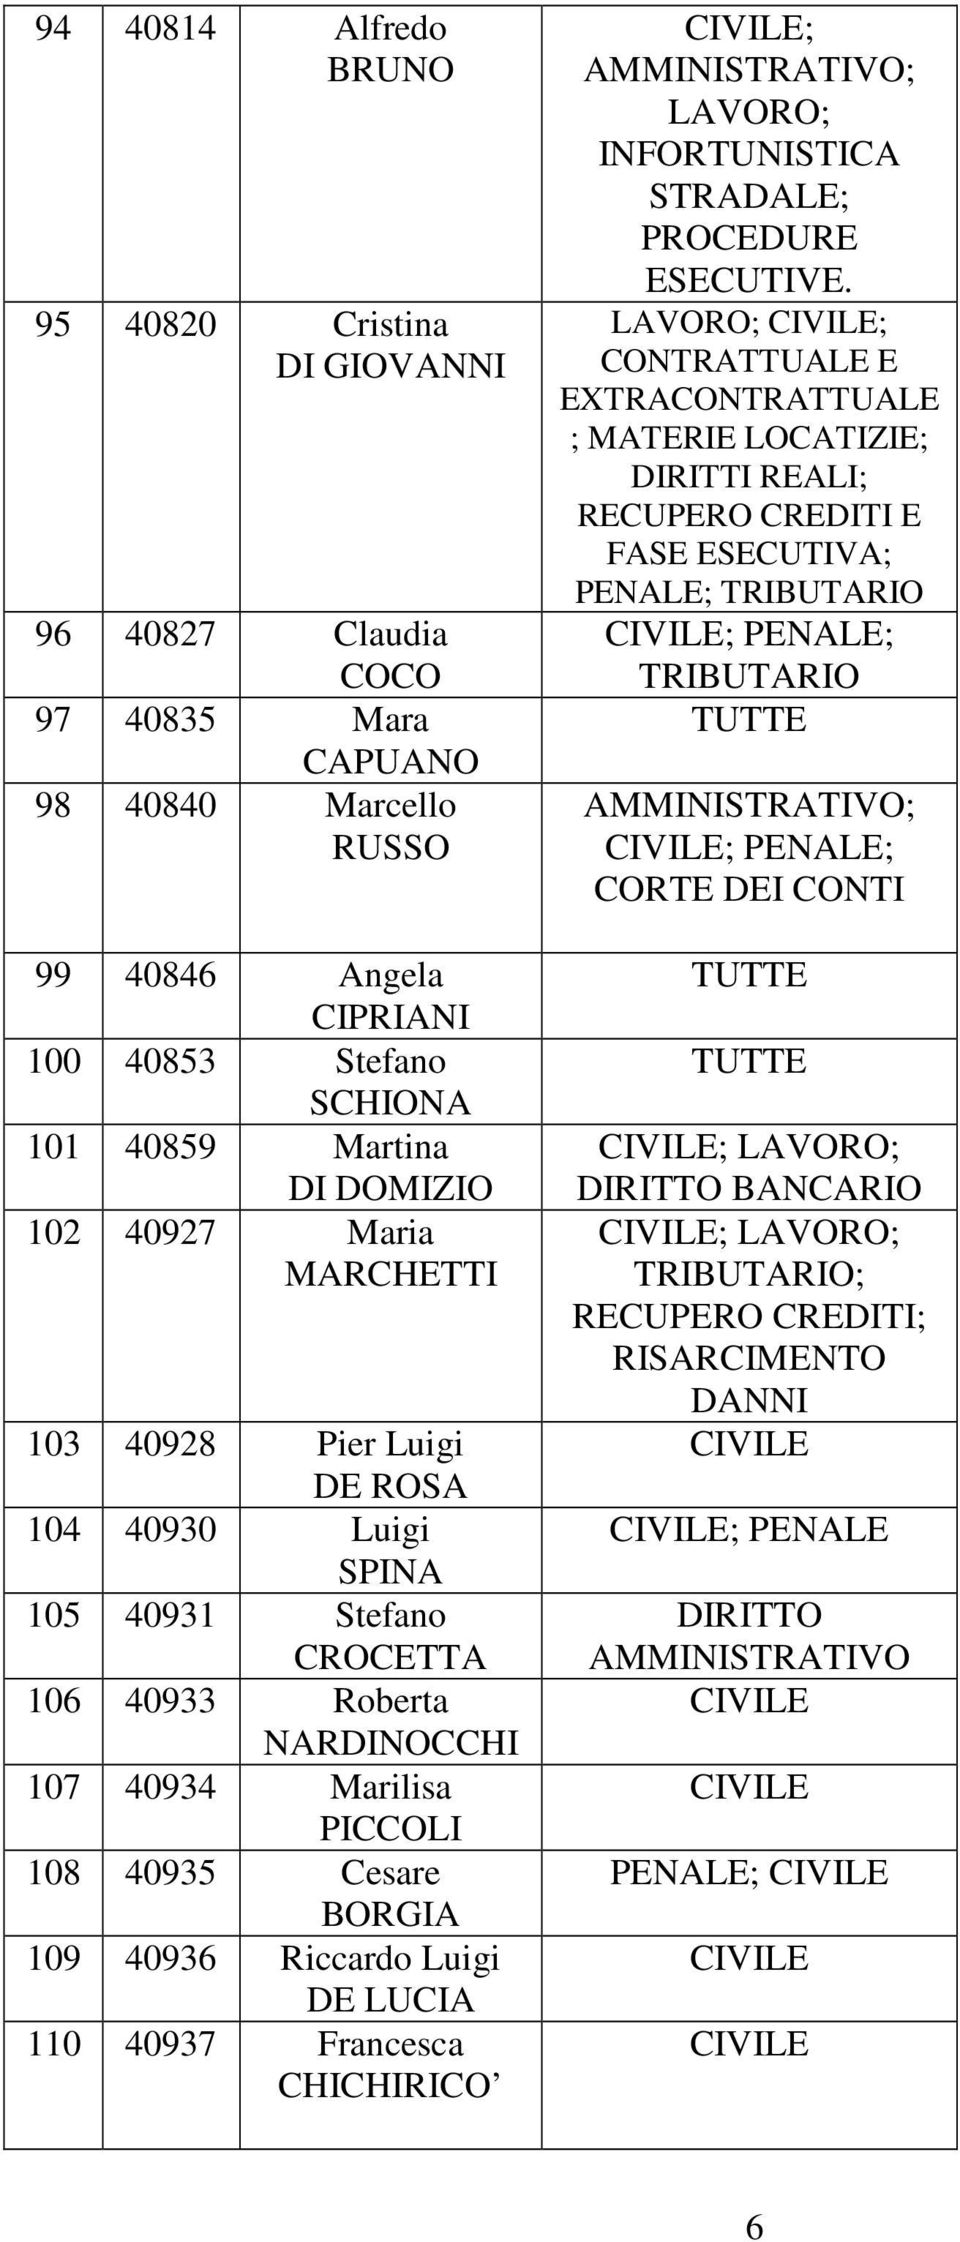 40935 Cesare BORGIA 109 40936 Riccardo Luigi DE LUCIA 110 40937 Francesca CHICHIRICO ; ; ; INFORTUNISTICA STRADALE; PROCEDURE ESECUTIVE.